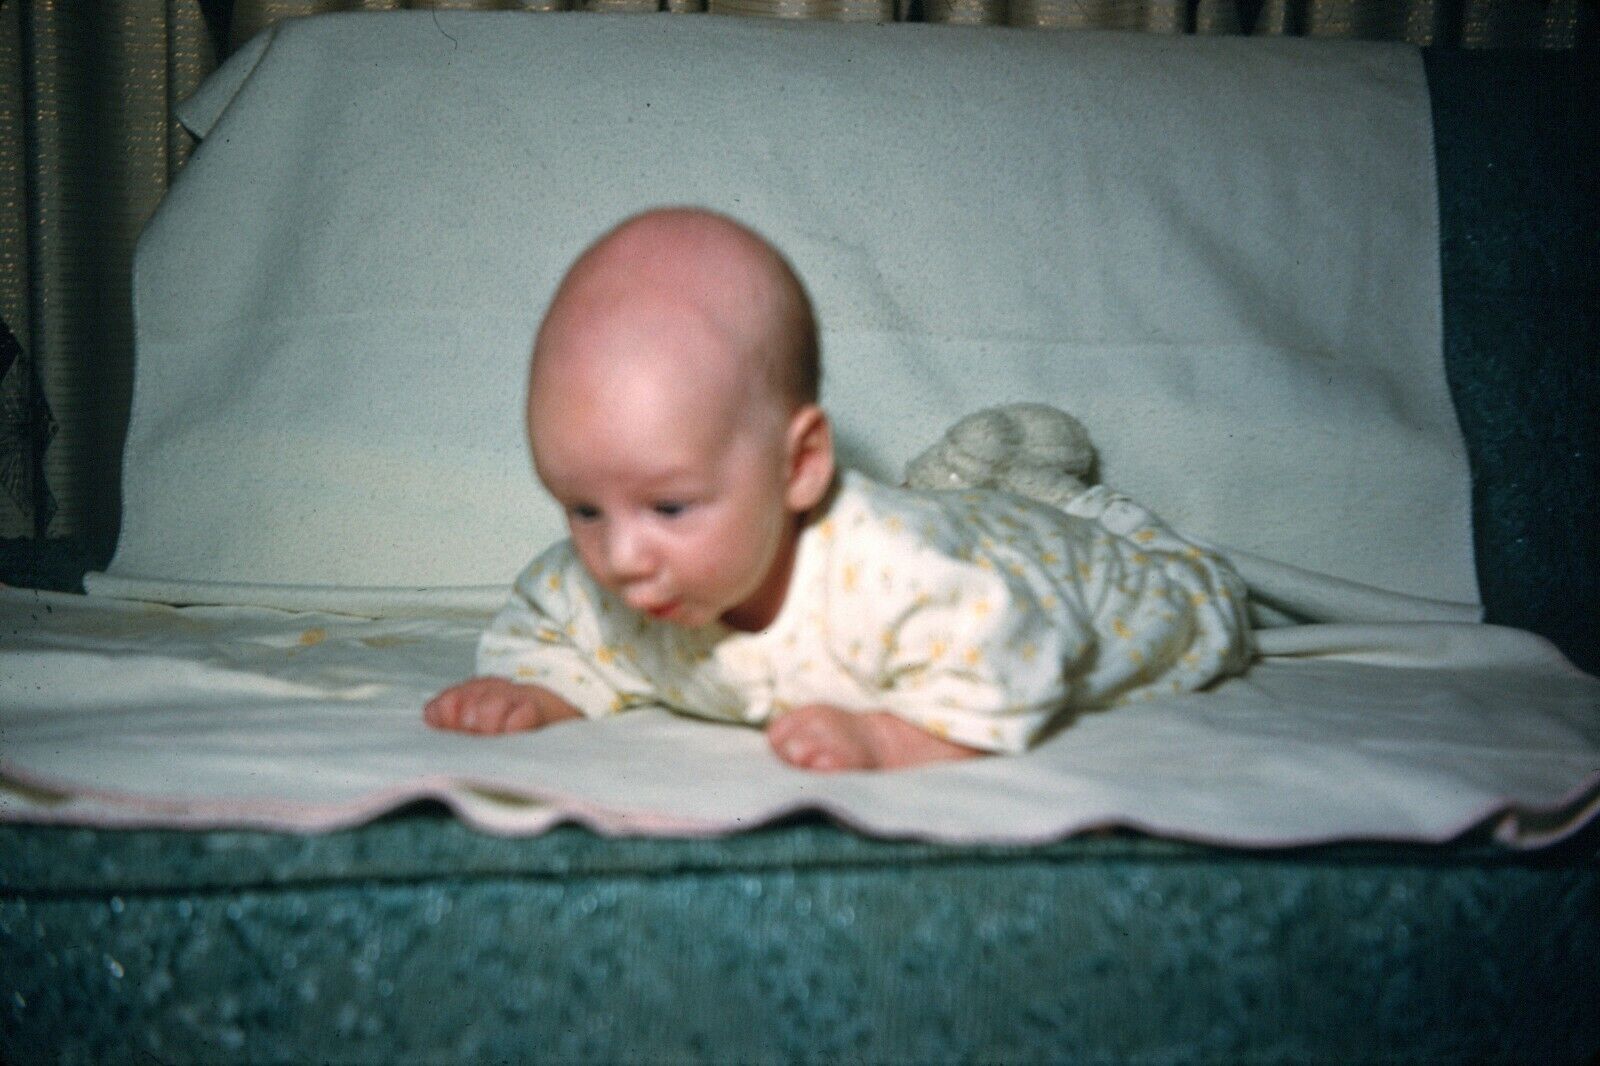 1959 Baby Cooing Tummy Time on Blanket 50s Vintage 35mm Slide